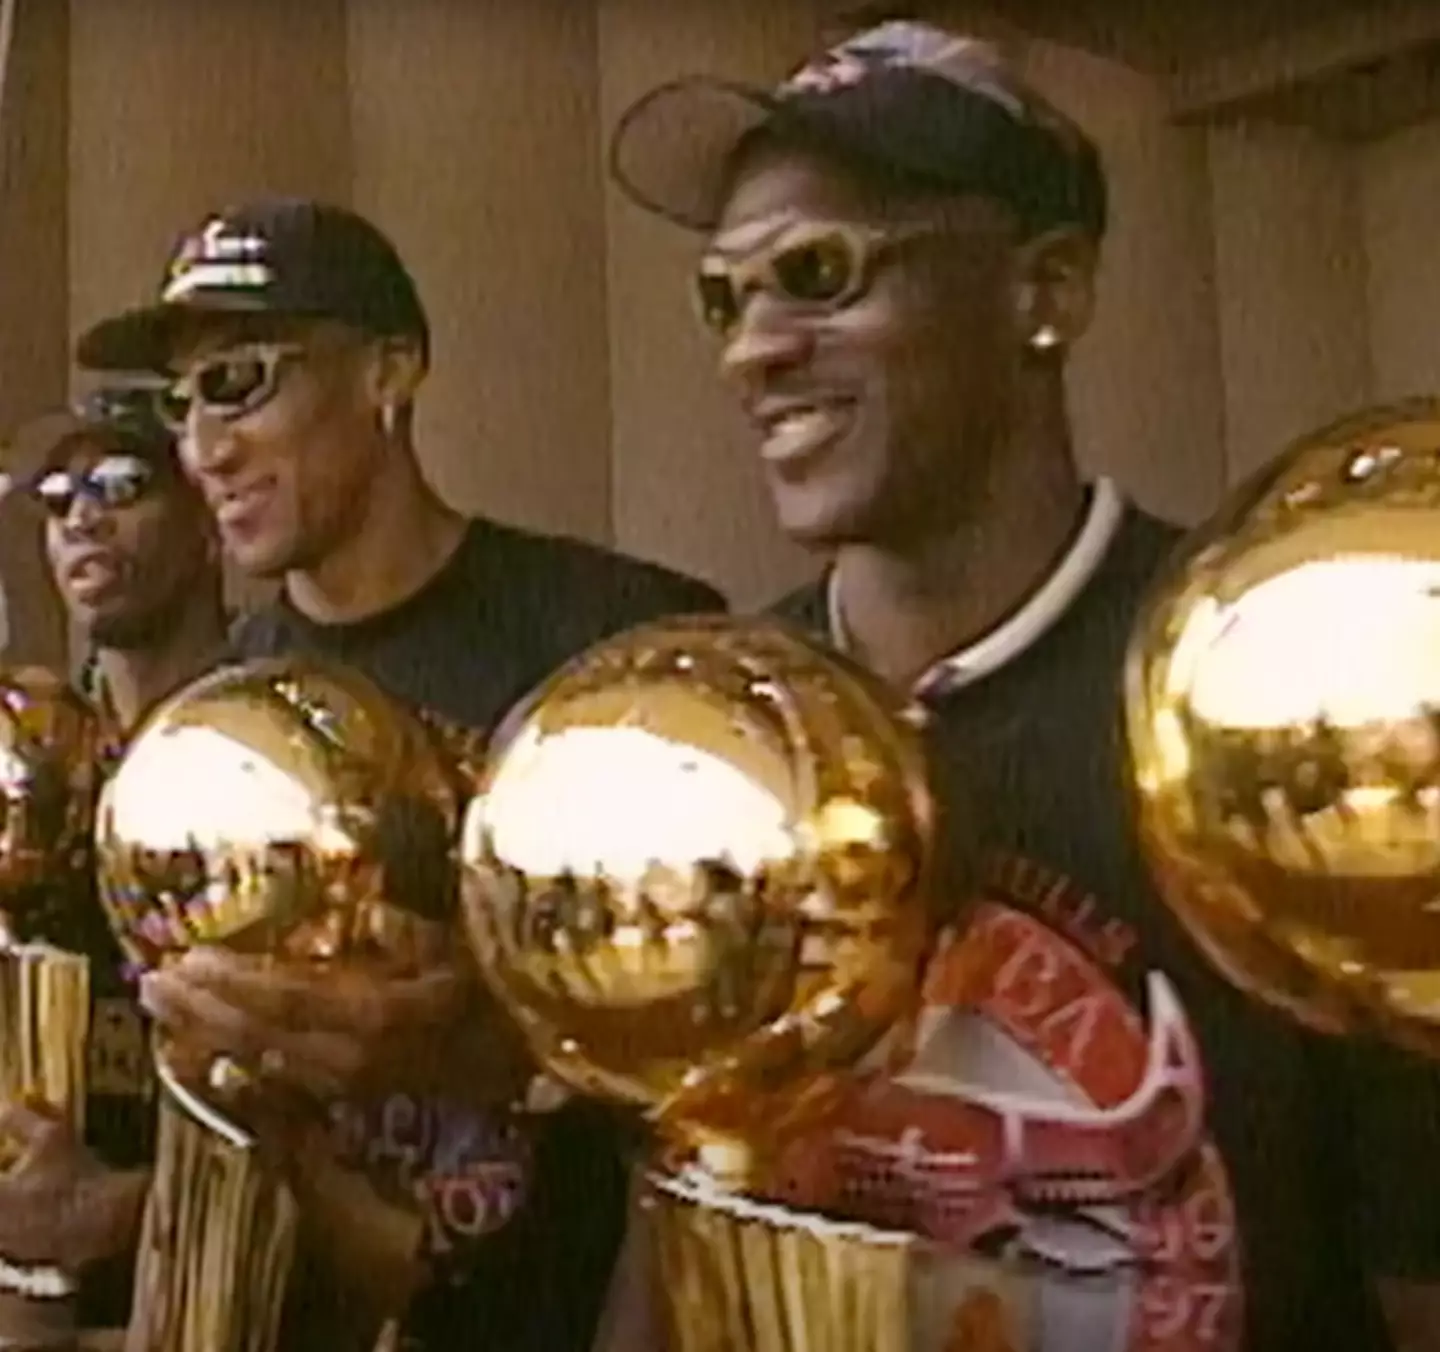 Michael Jordan (right) with Scottie Pippen (middle).